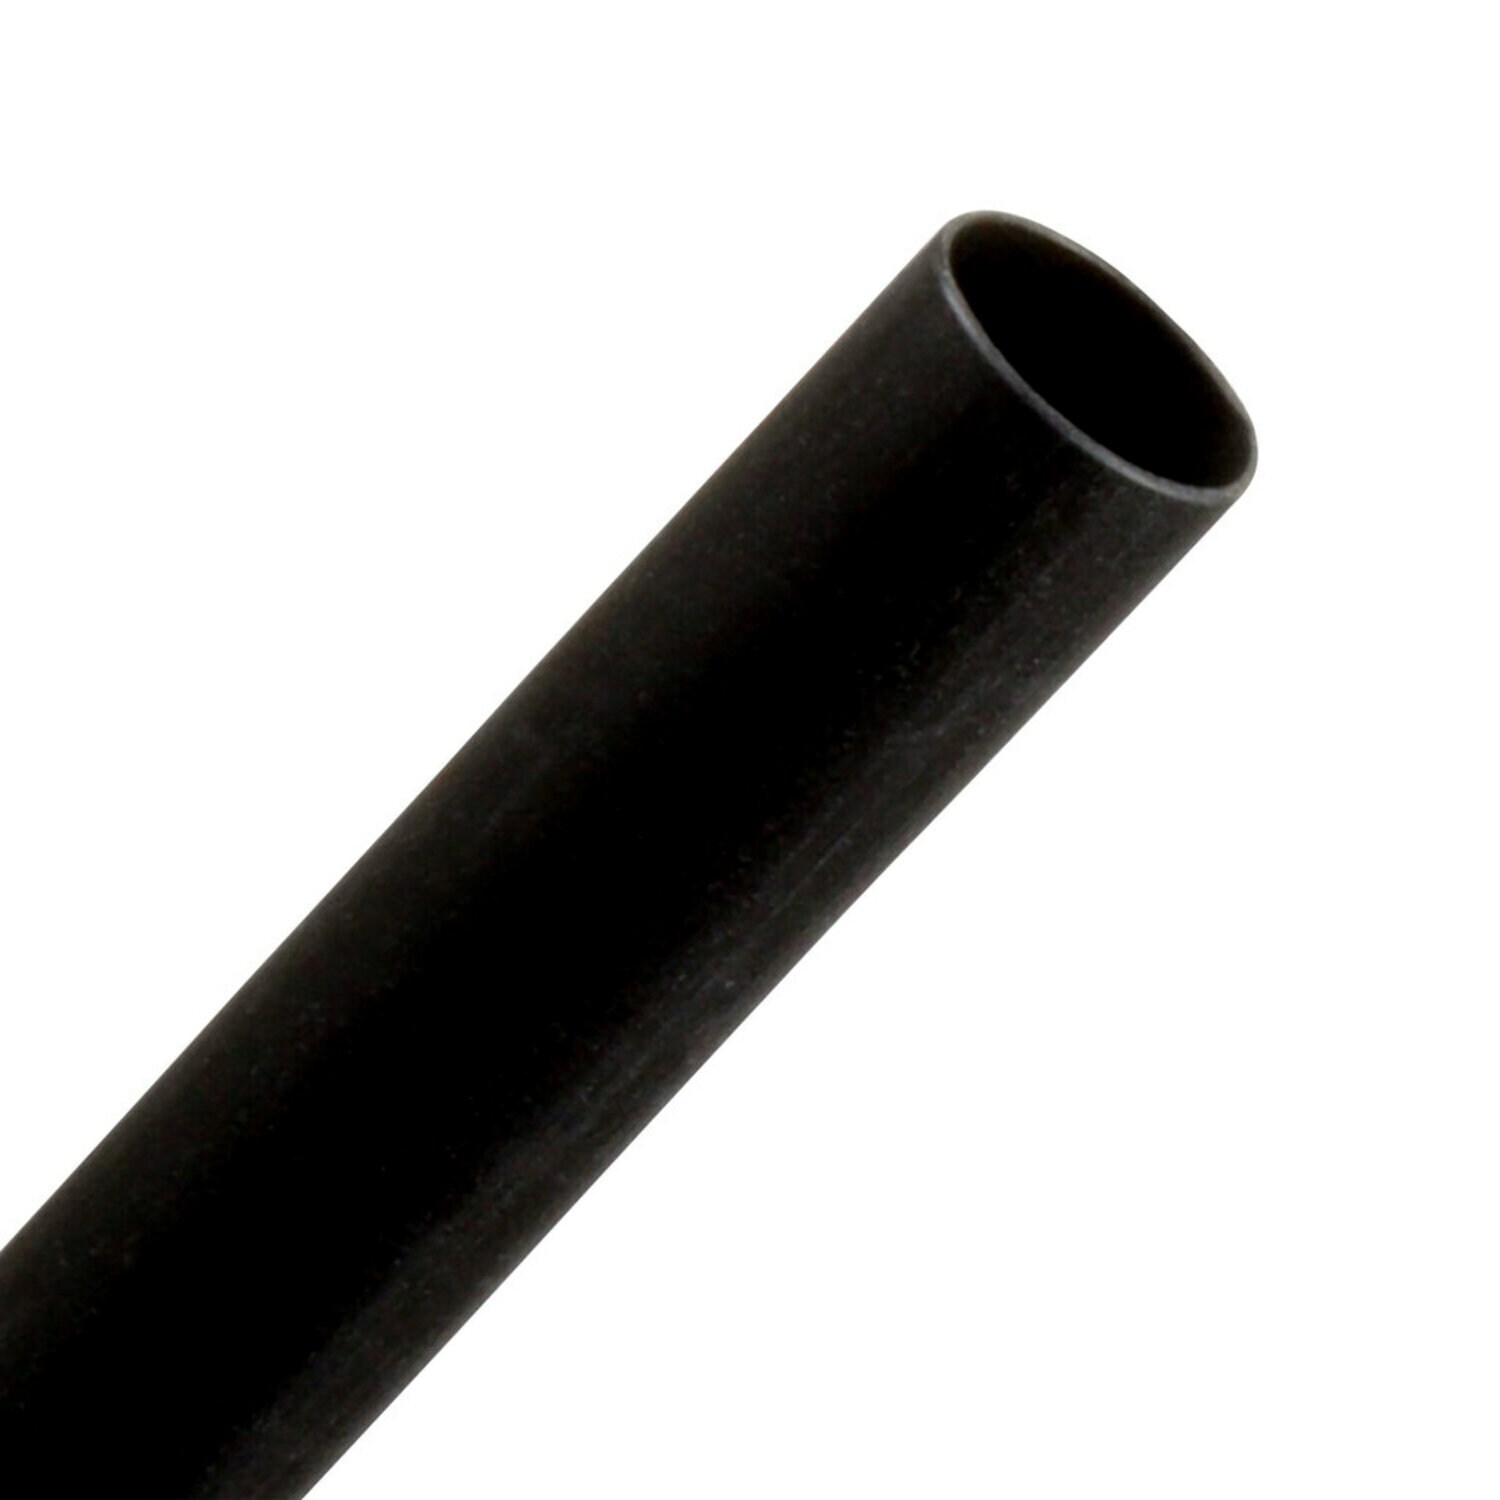 7100054613 - 3M Heat Shrink Thin-Wall Tubing FP-301-1/4-Black-200`: 200 ft spool
length, 600 linear ft/box, 3 Rolls/Case